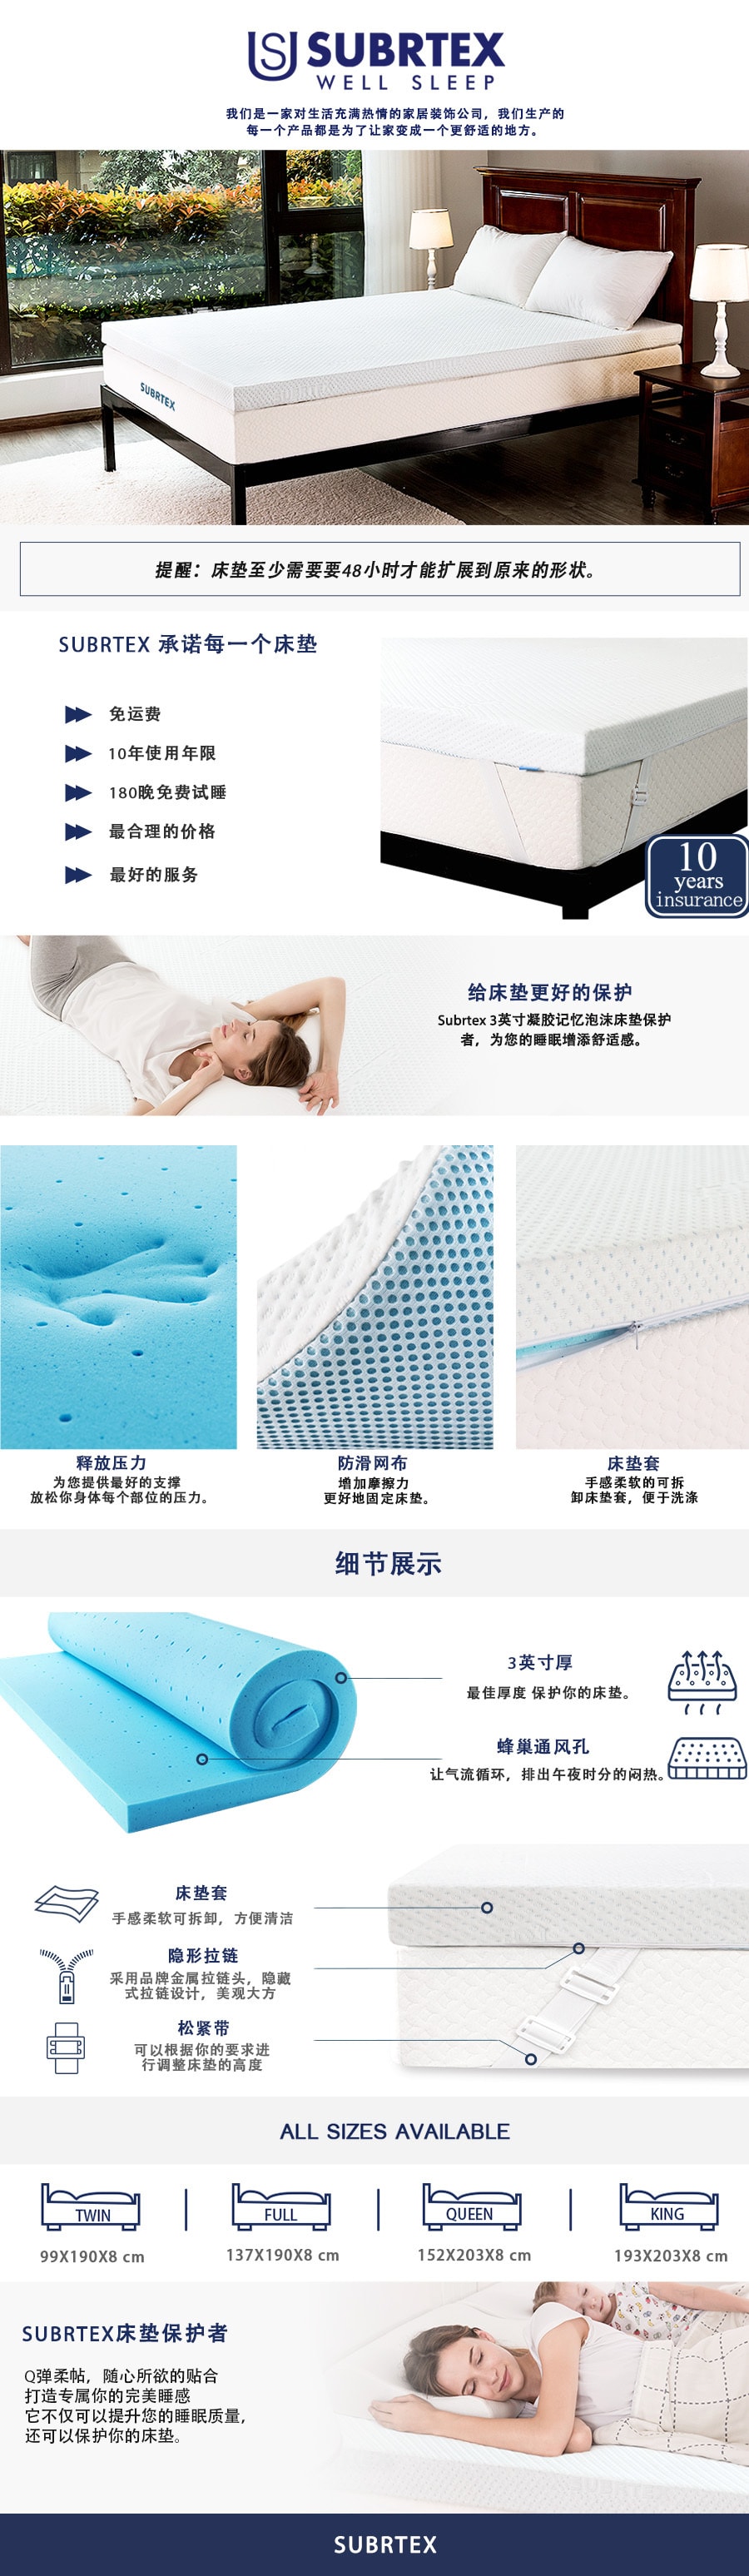 SUBRTEX 3英寸 薄款记忆棉床垫 床垫保护垫 慢回弹海绵软垫 Twin 9公斤